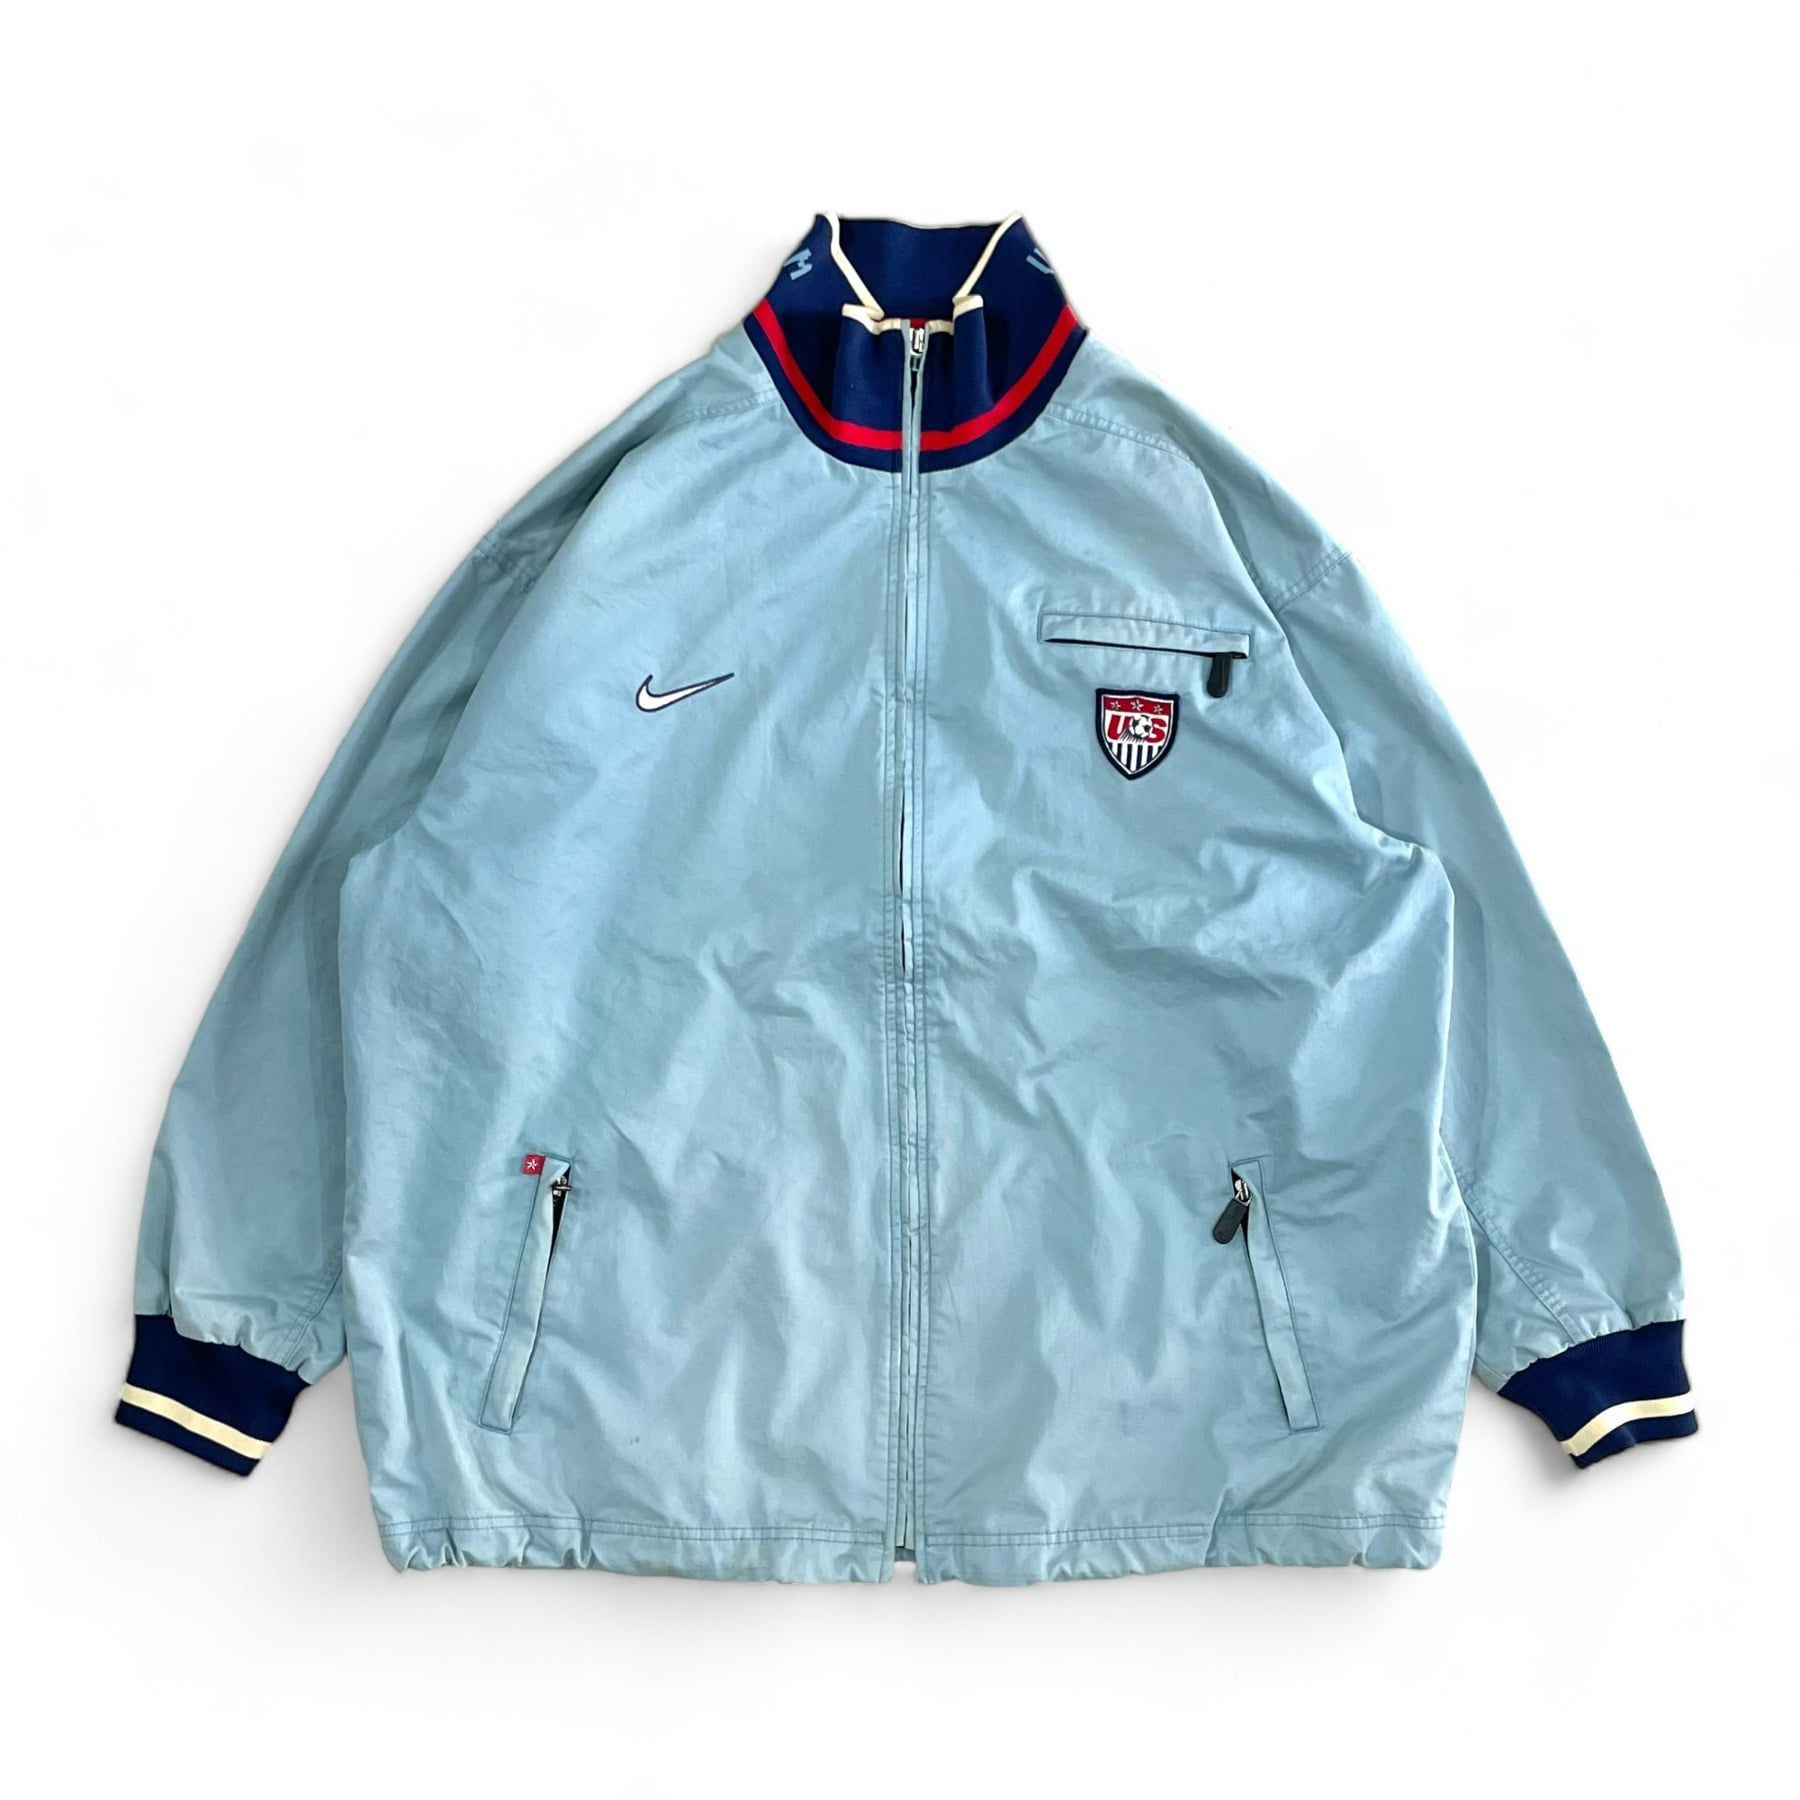 1997 NIKE USA Soccer Team Jacket - XL